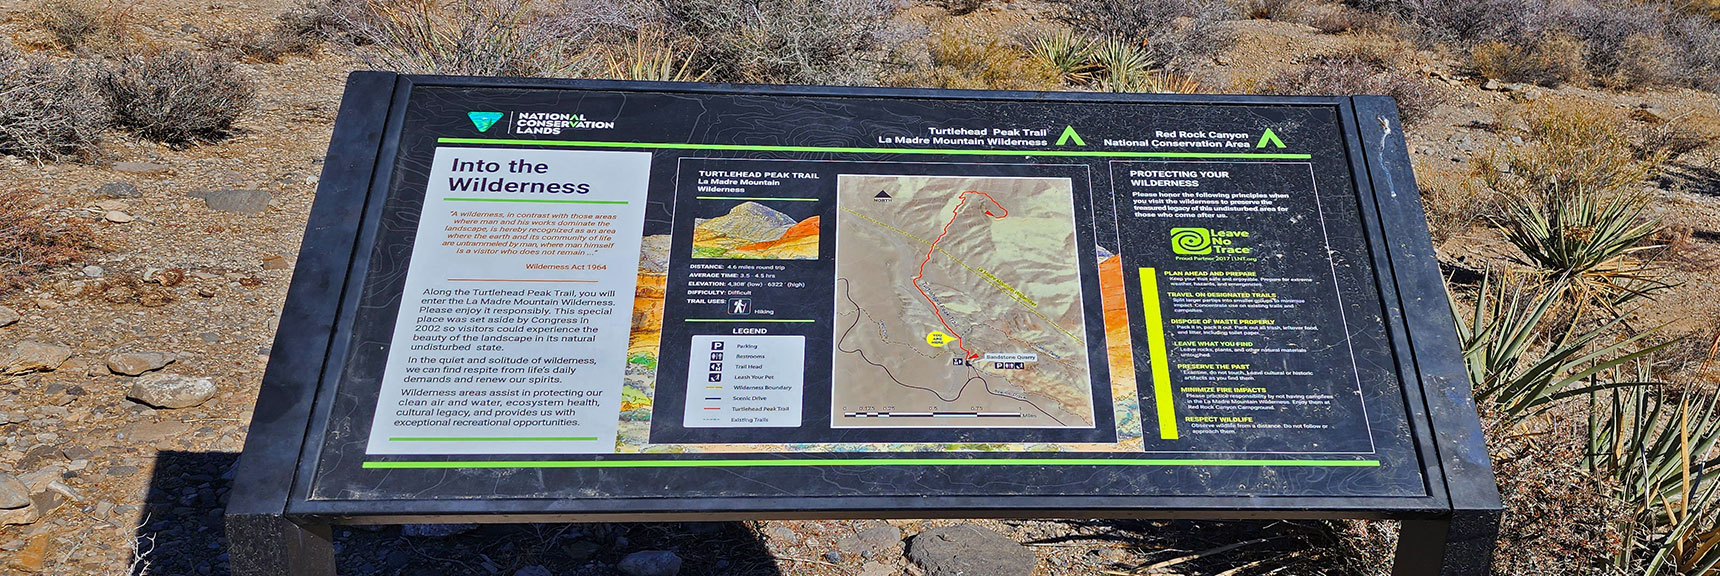 Turtlehead Peak Interpretive Display | Turtlehead Peak | Red Rock Canyon National Conservation Area, Nevada